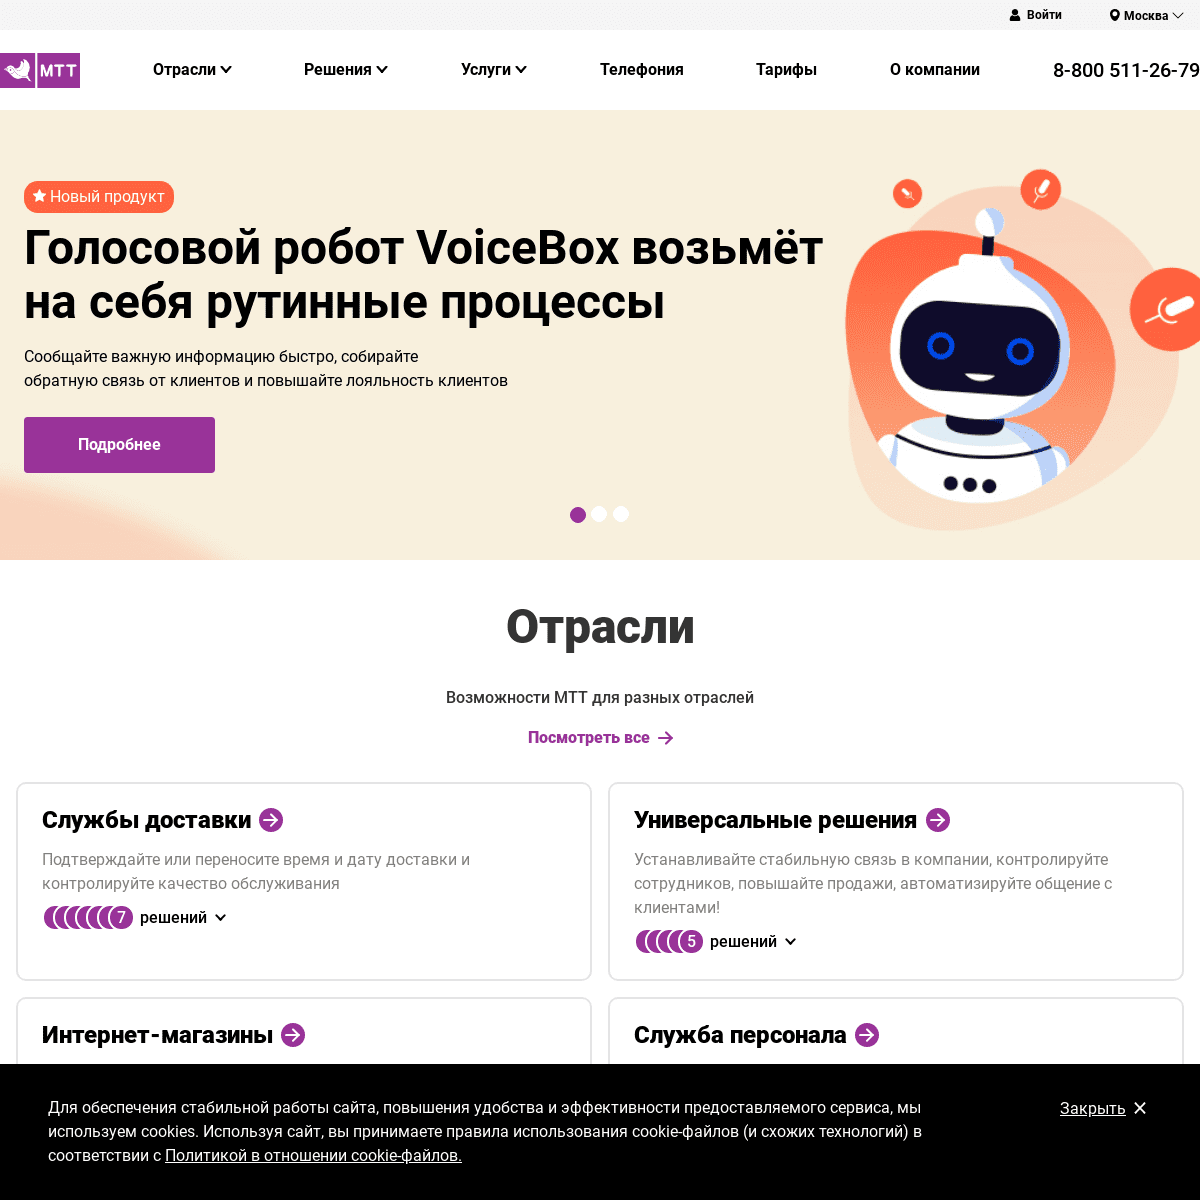 A complete backup of https://mtt.ru